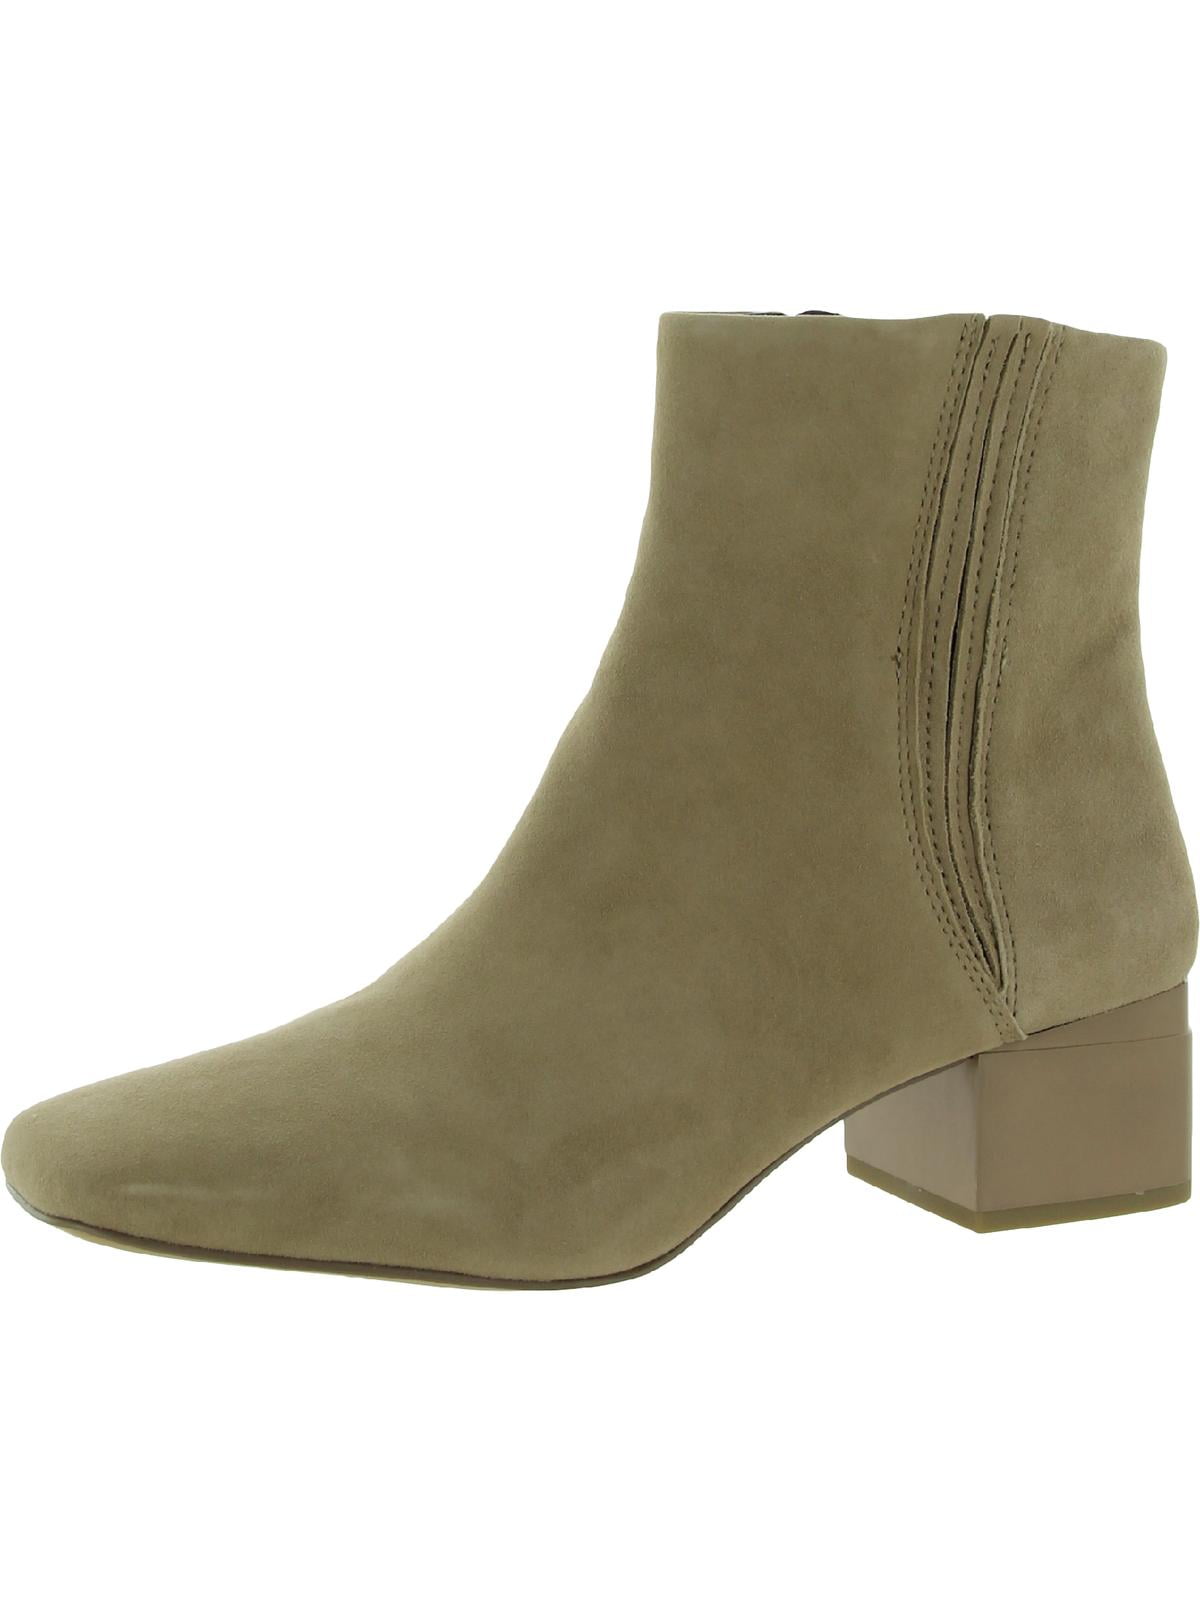 Franco Sarto Womens Waxtona Suede Square Toe Ankle Boots - Walmart.com